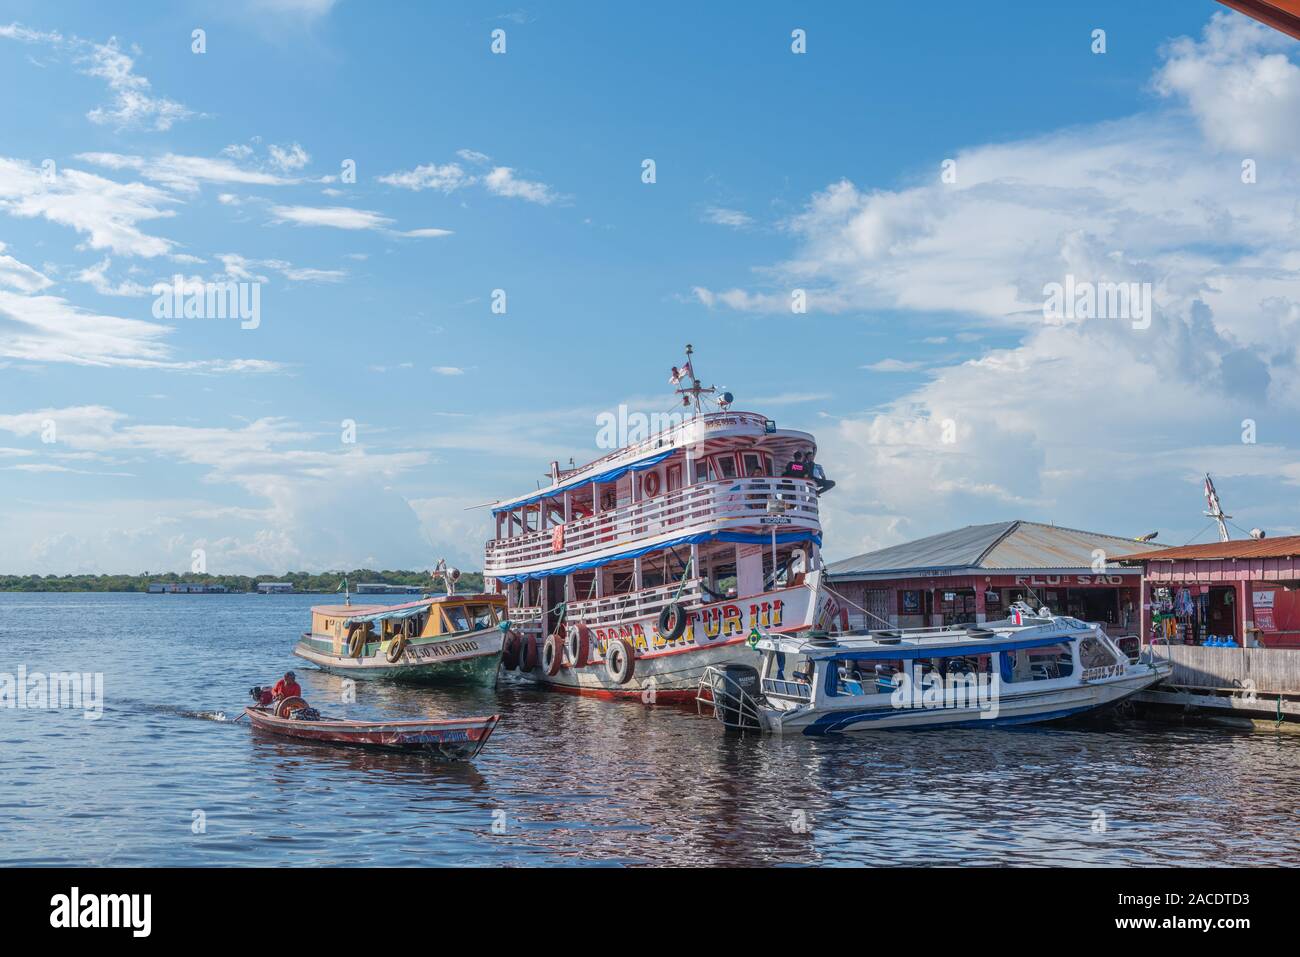 Lebendige Stadt Tefé am Lago Tefé, Amazona Fluss, Amazon, nördlichen Brasilien, Lateinamerika Stockfoto